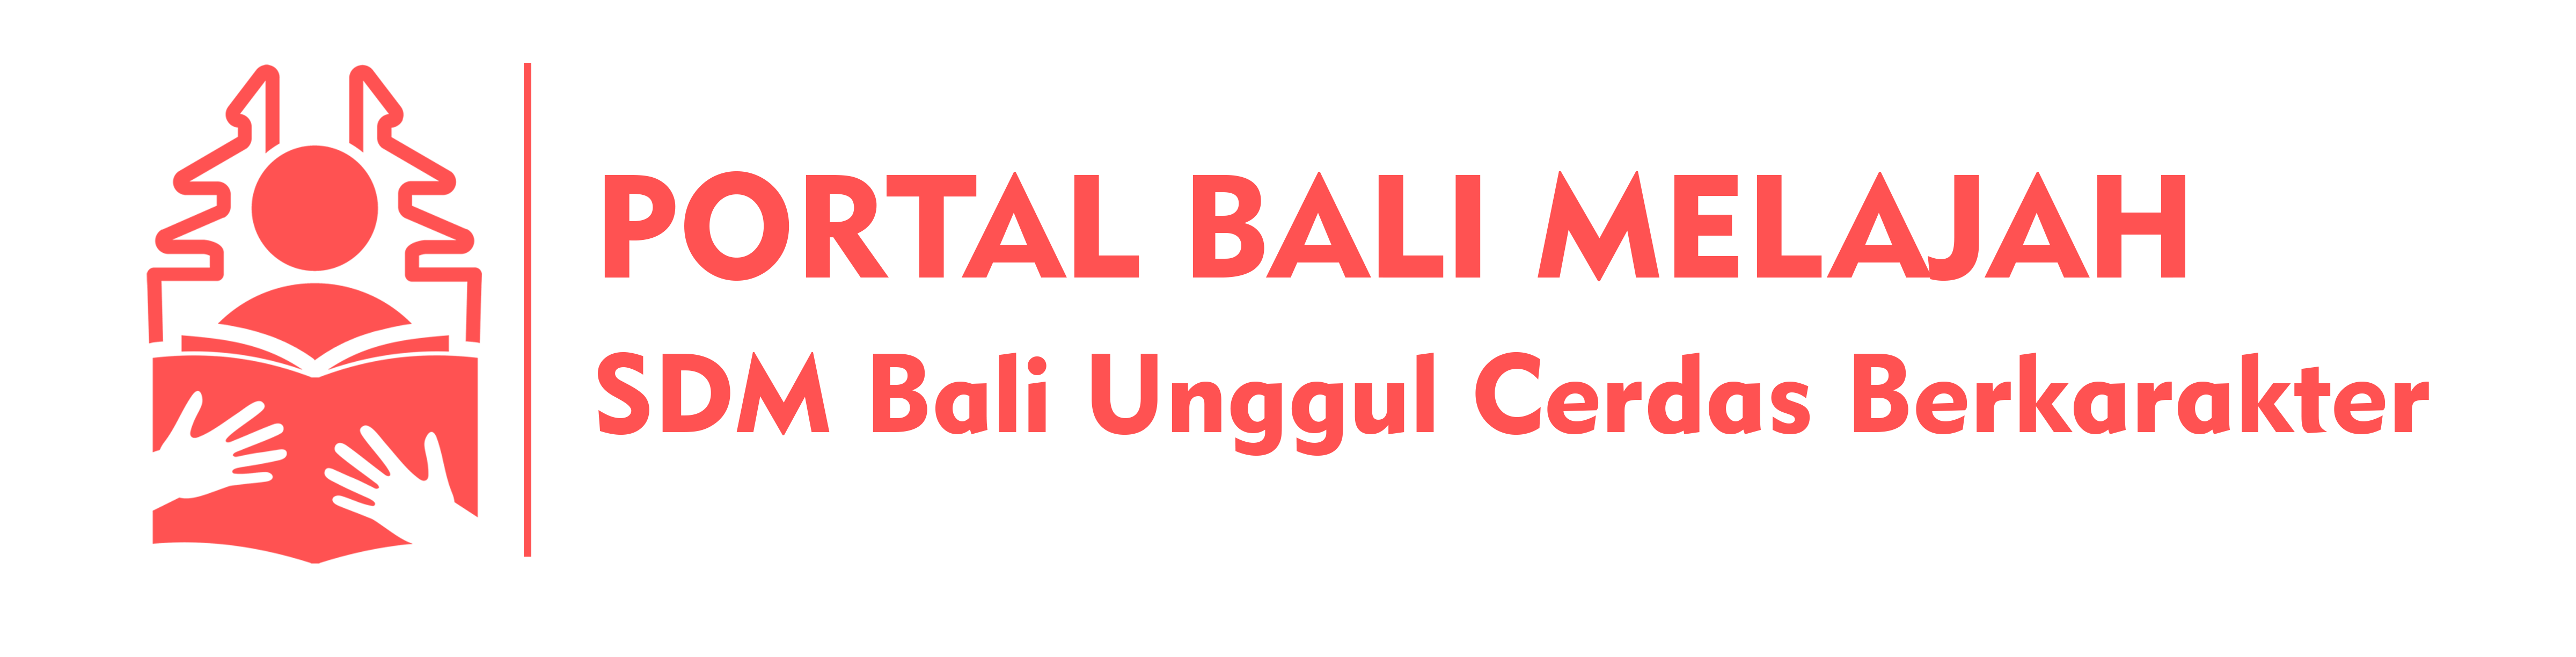 PORTAL BALI MELAJAH - UPTD BALAI PENGEMBANGAN TEKNOLOGI PENDIDIKAN, DISDIKPORA PROV. BALI